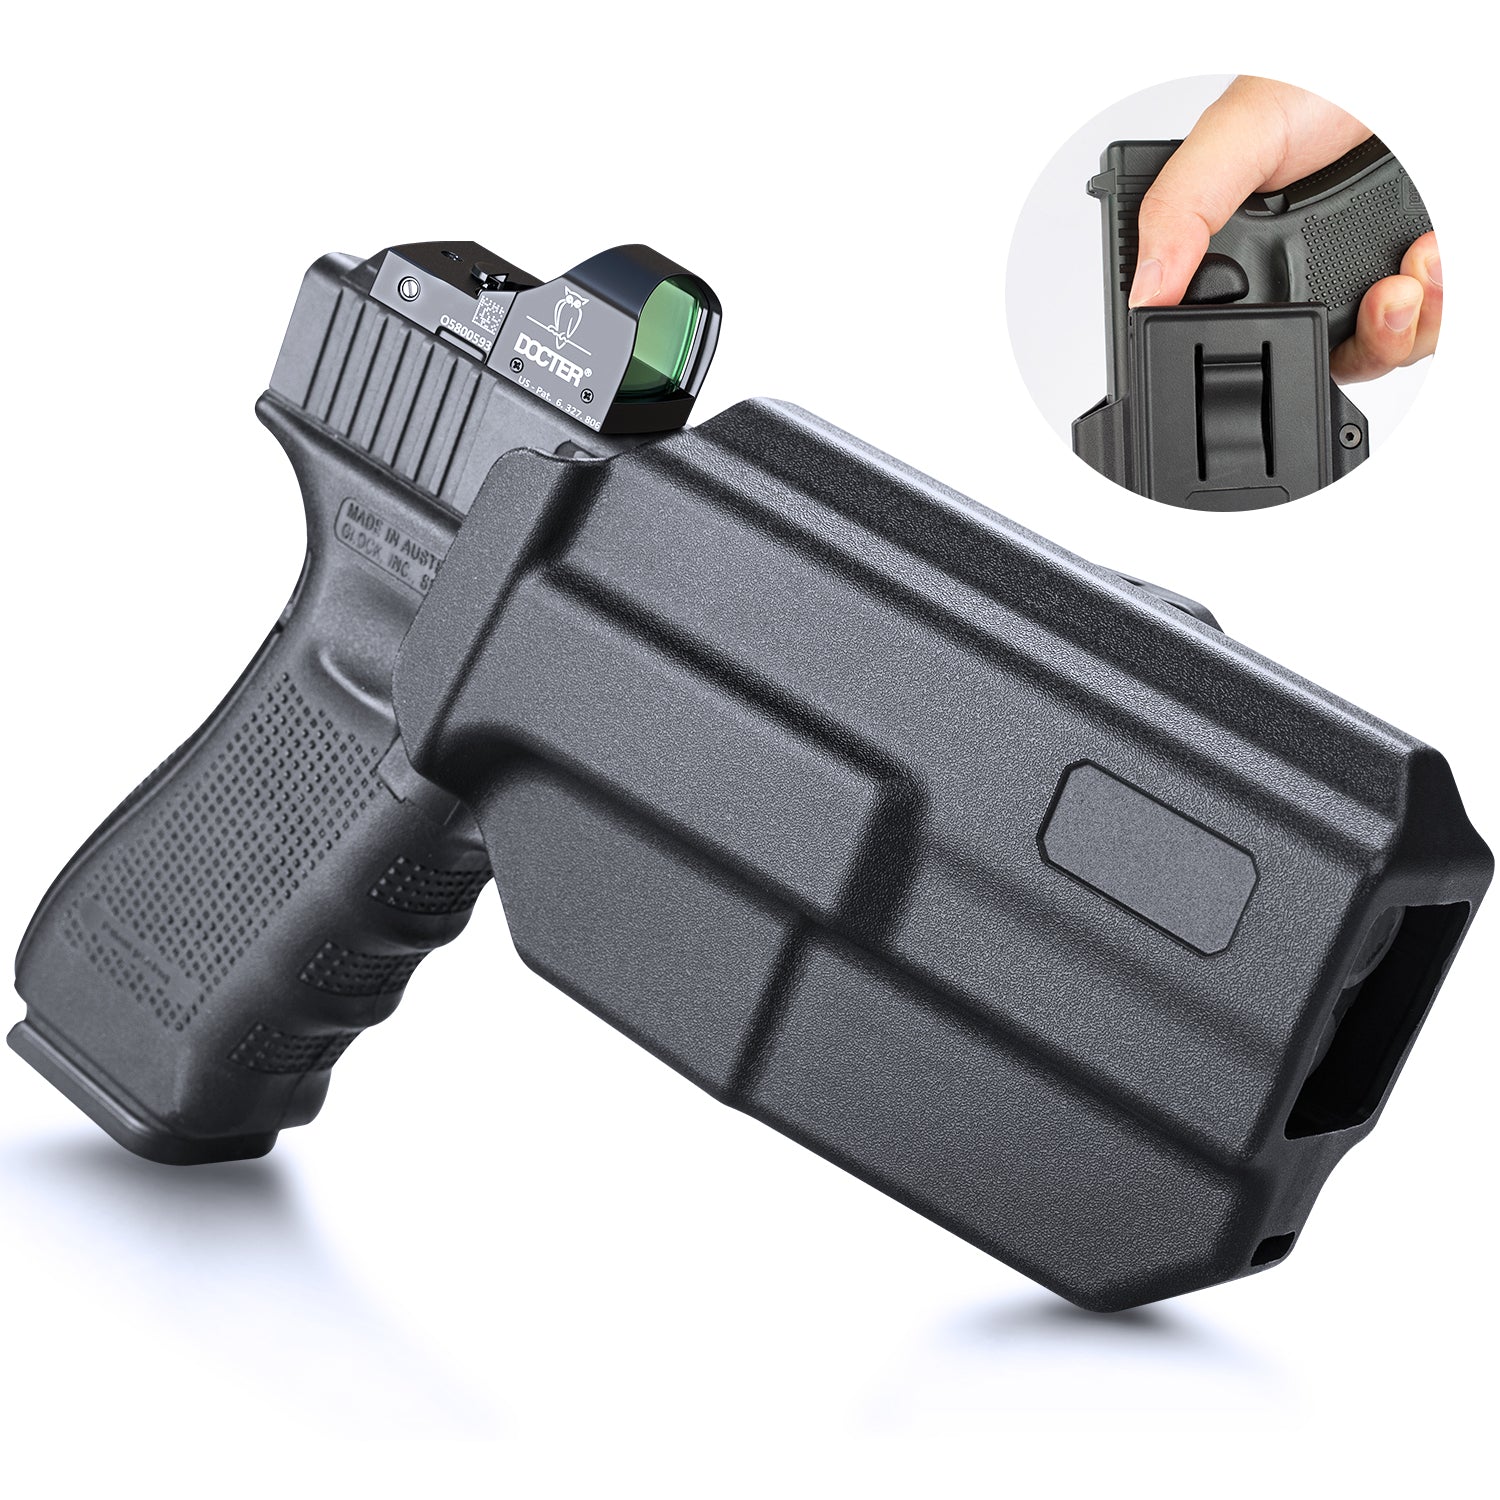 OWB Kydex Holster for Glock 17 22 31(Gen1-5) Adjustable Retention, Gu